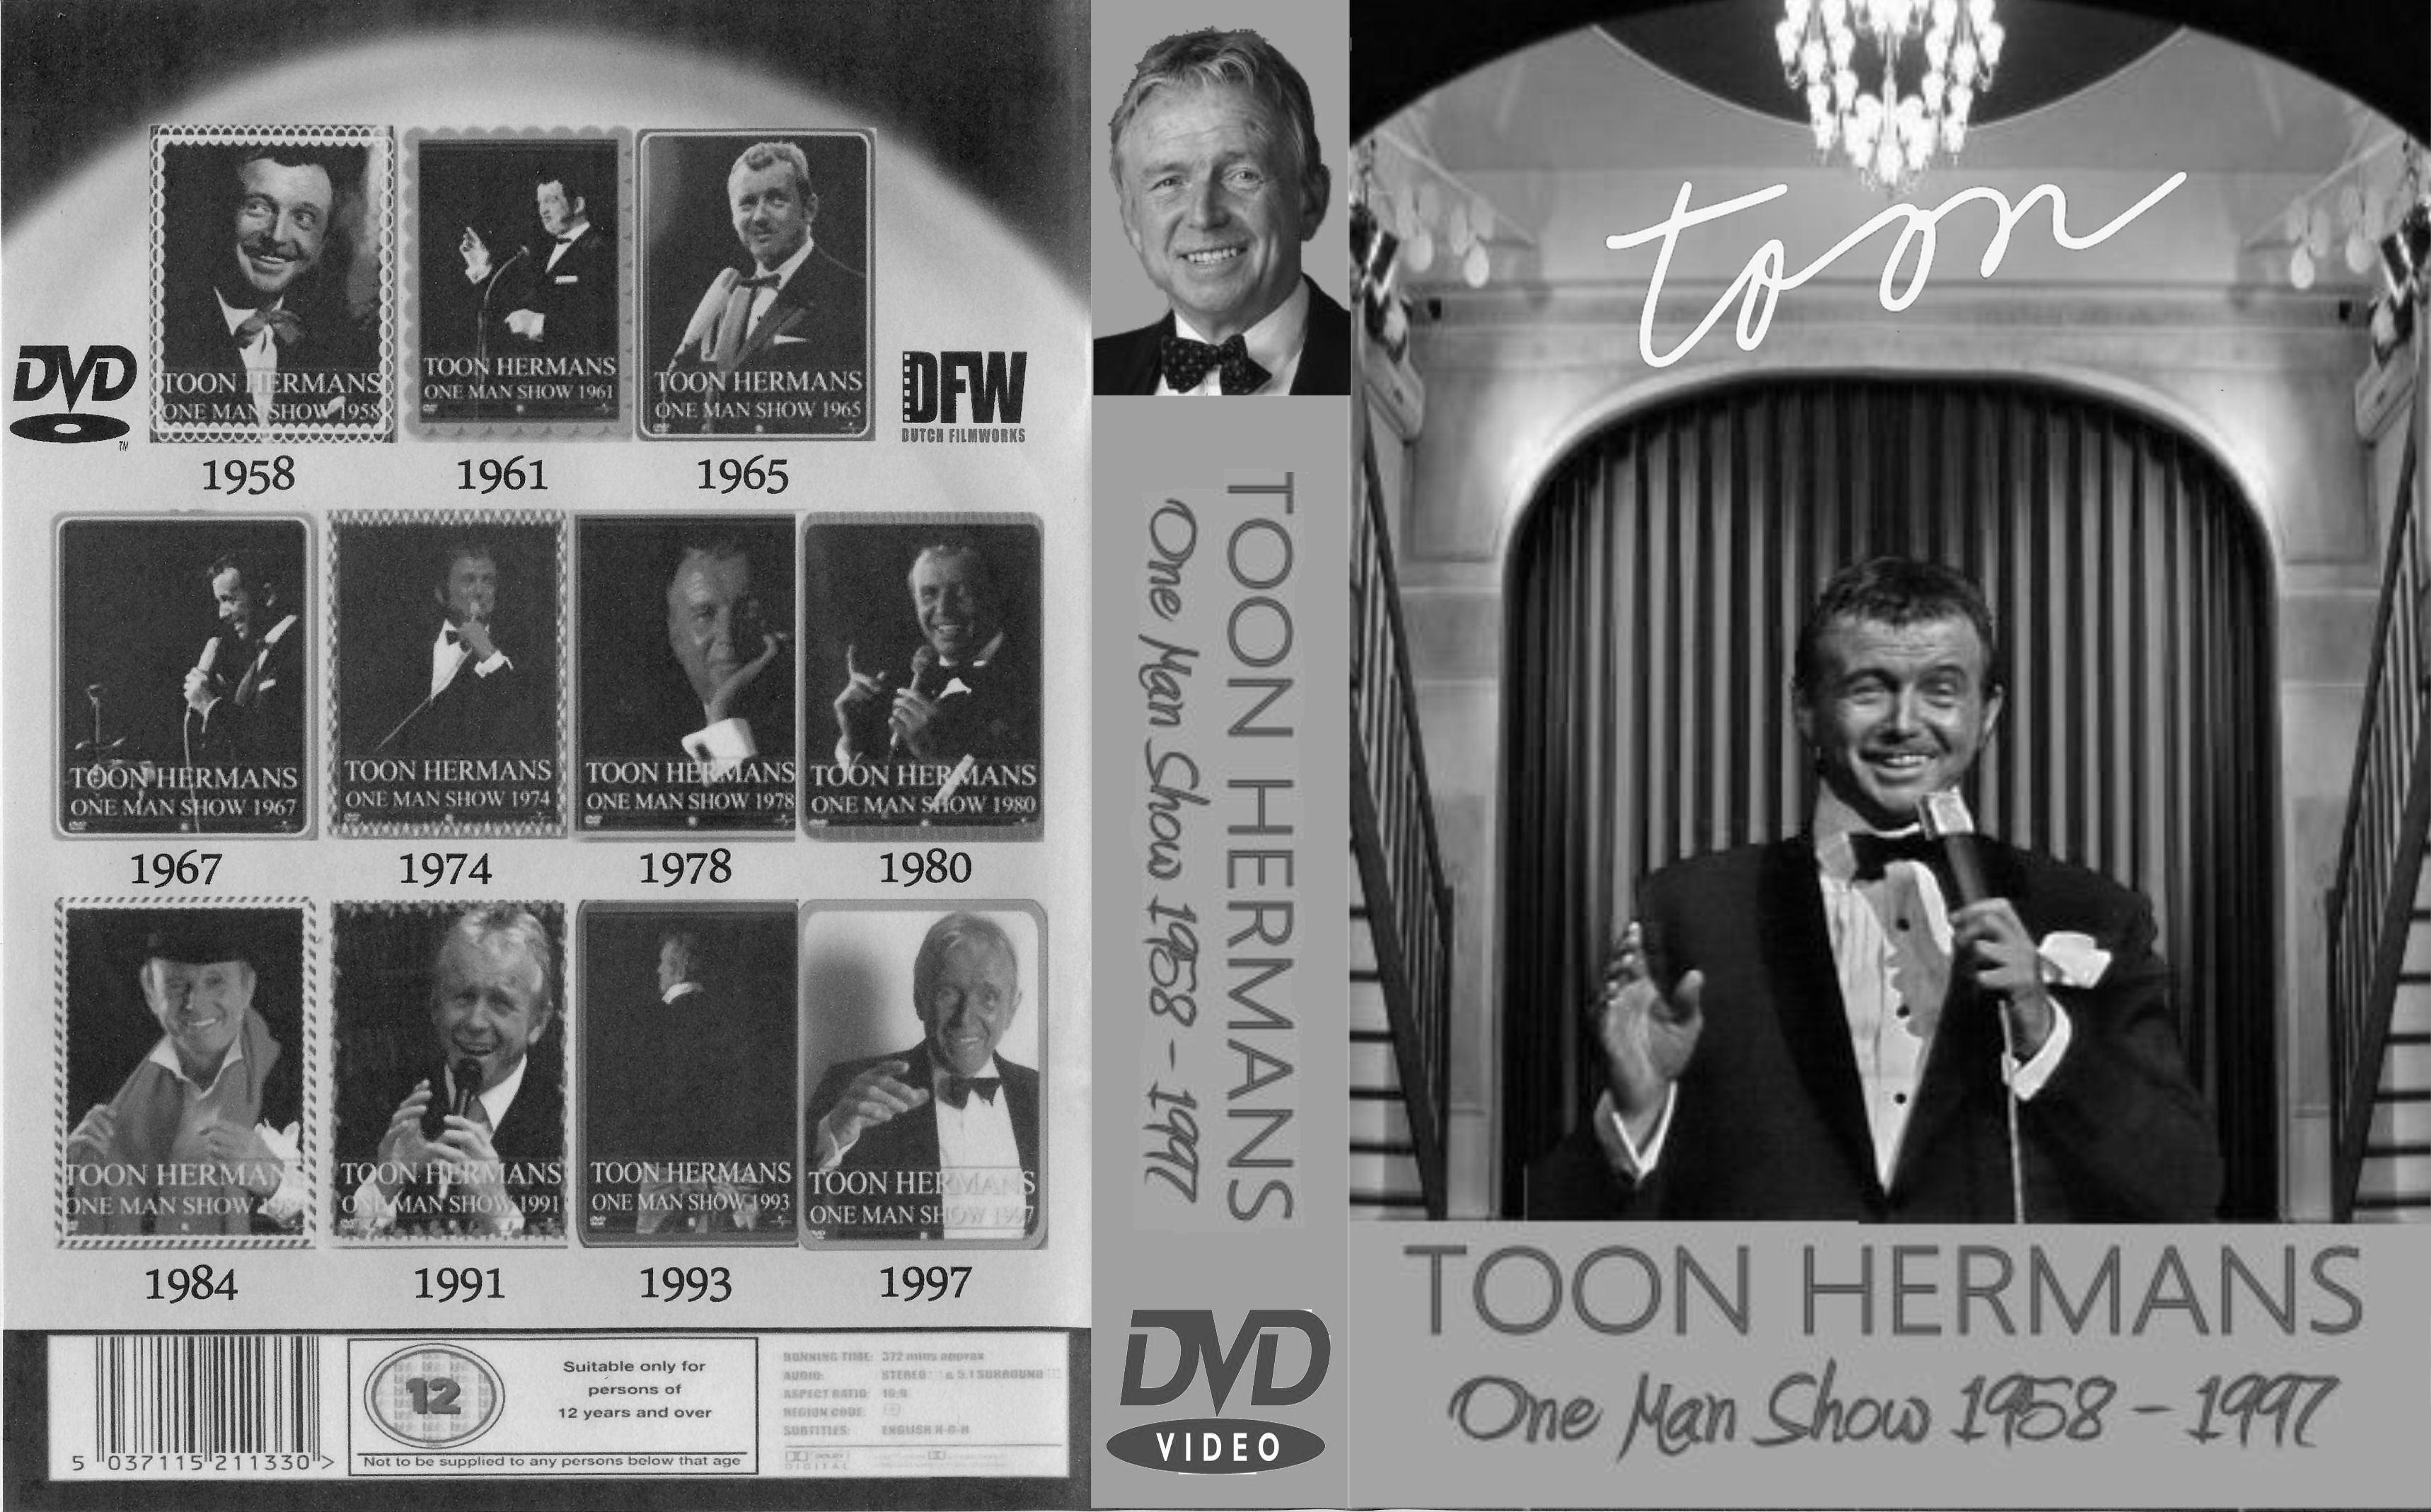 Toon Hermans One Man Show 1958 - 1997 - DvD 3 (1965)